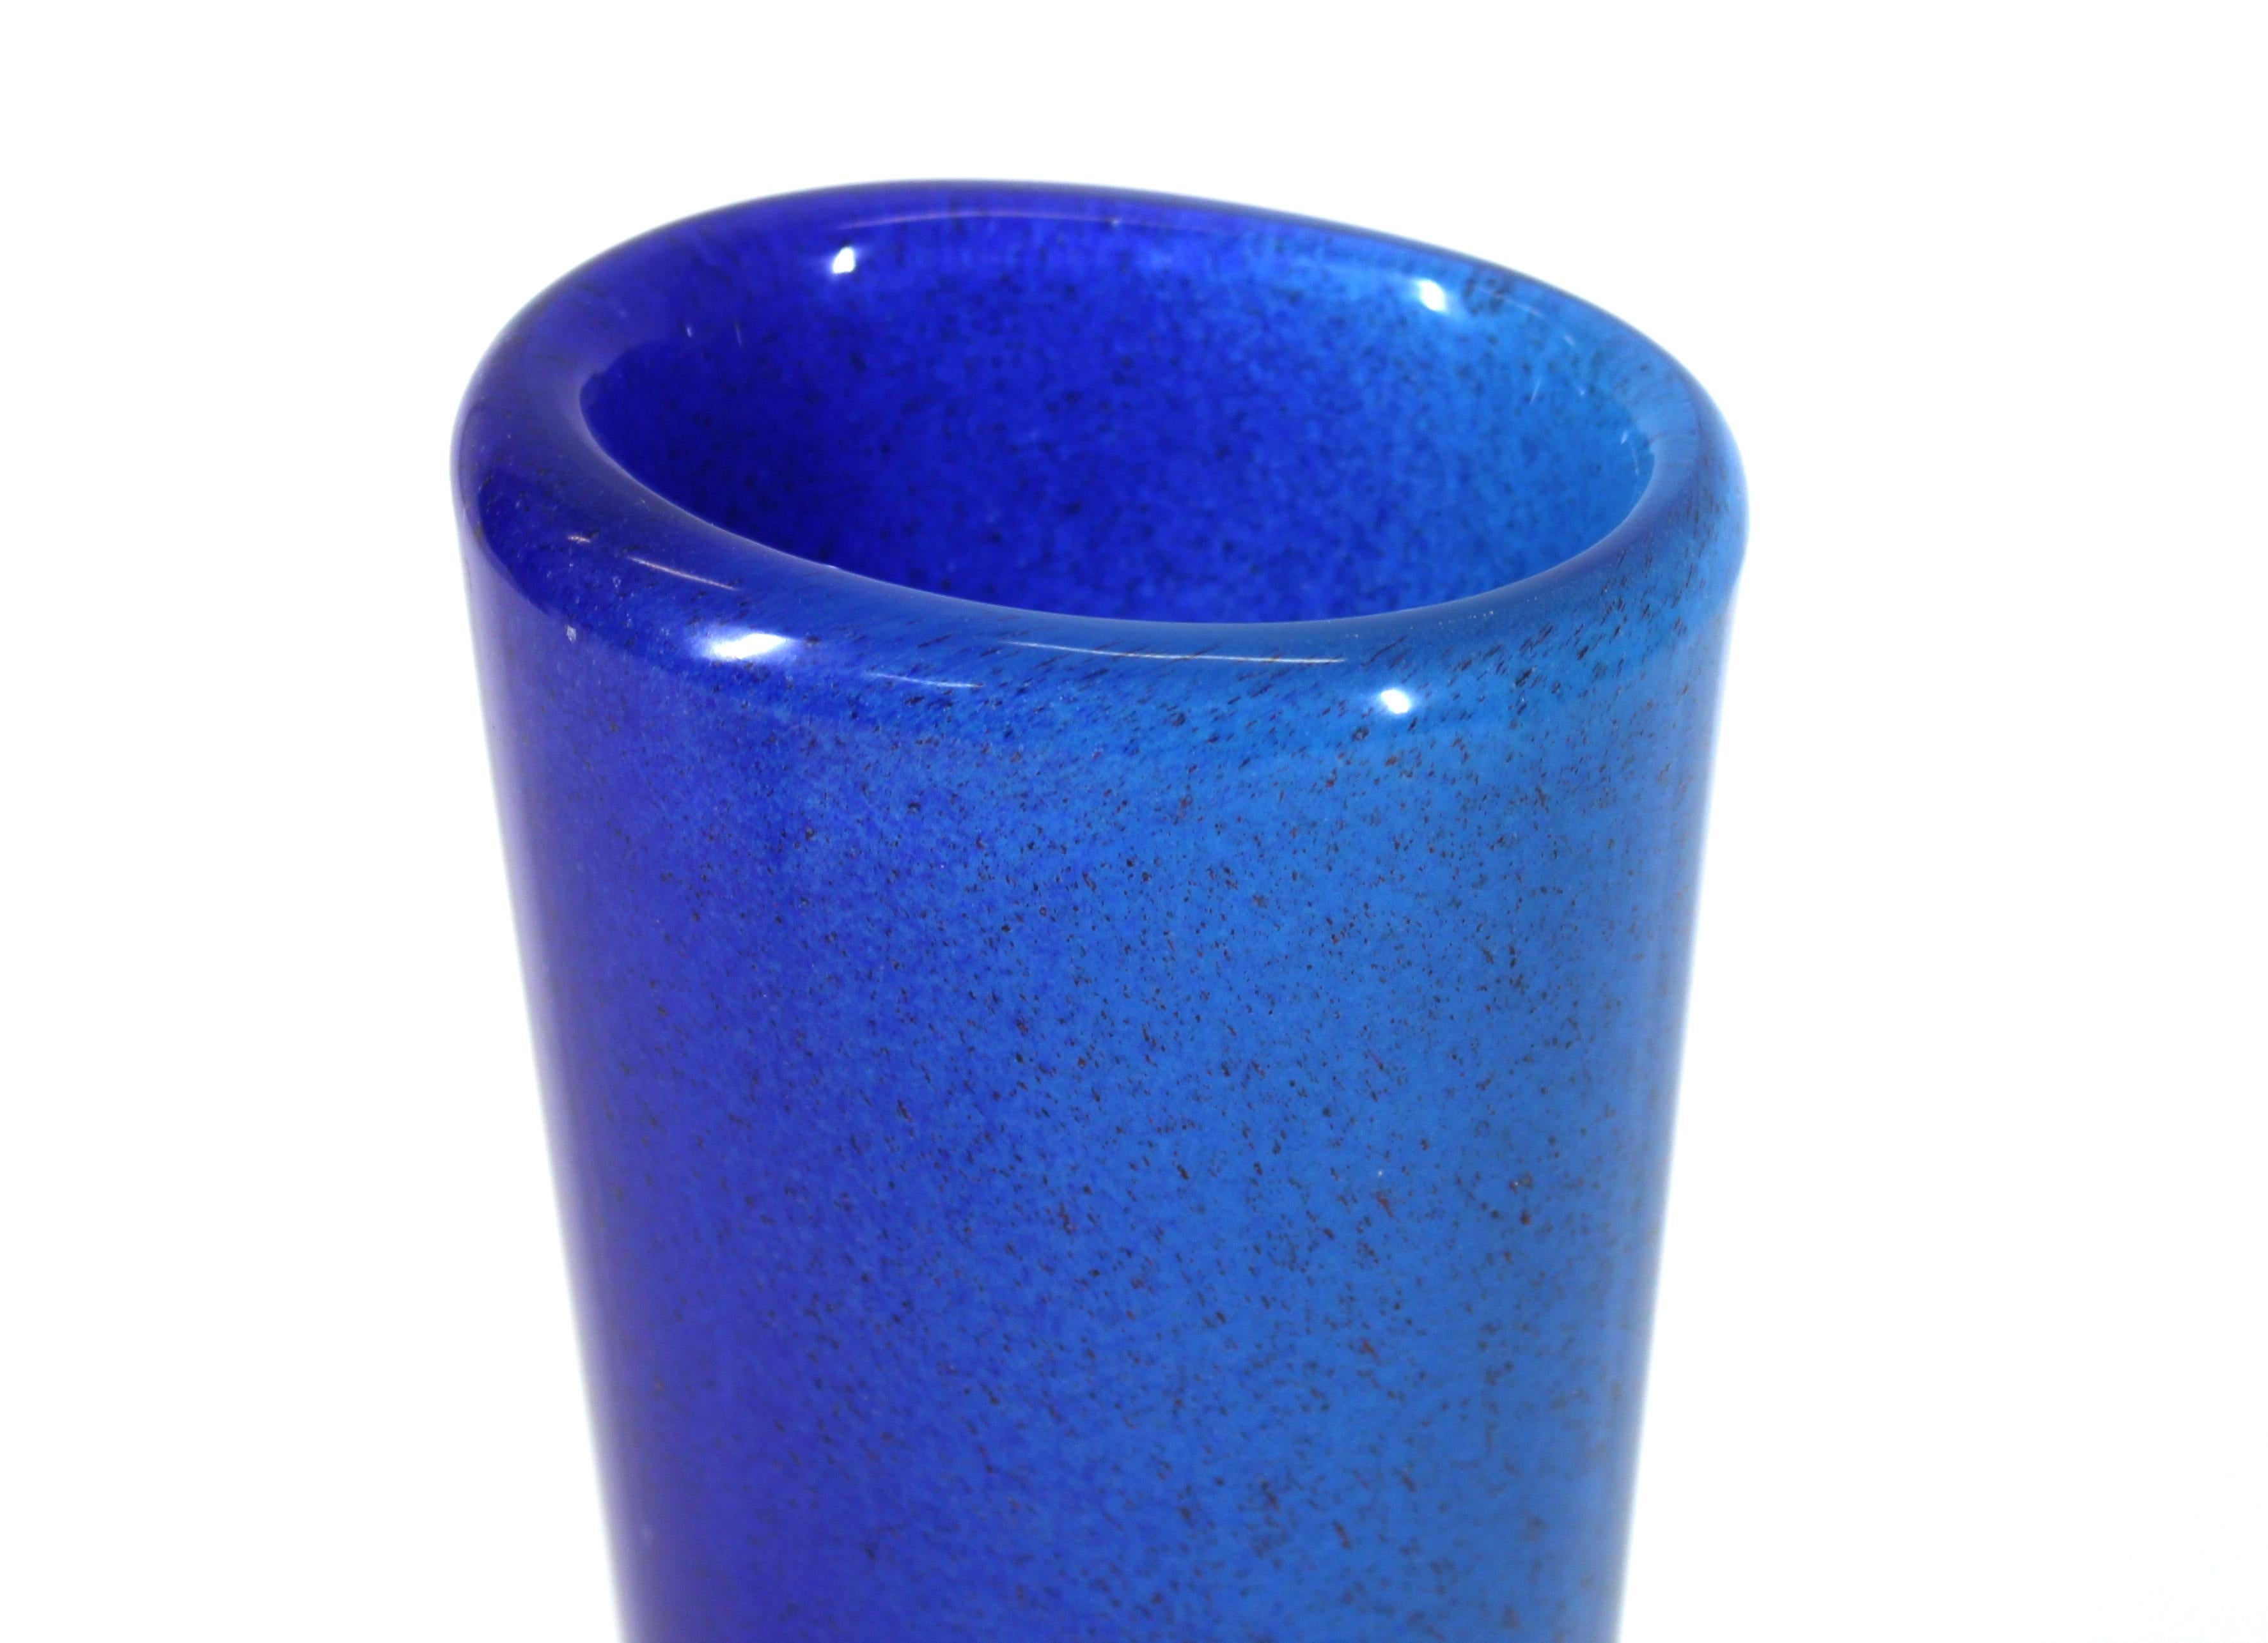 Dino Martens for Toso Italian Mid-Century Modern Murano Glass Vase in Blue 1